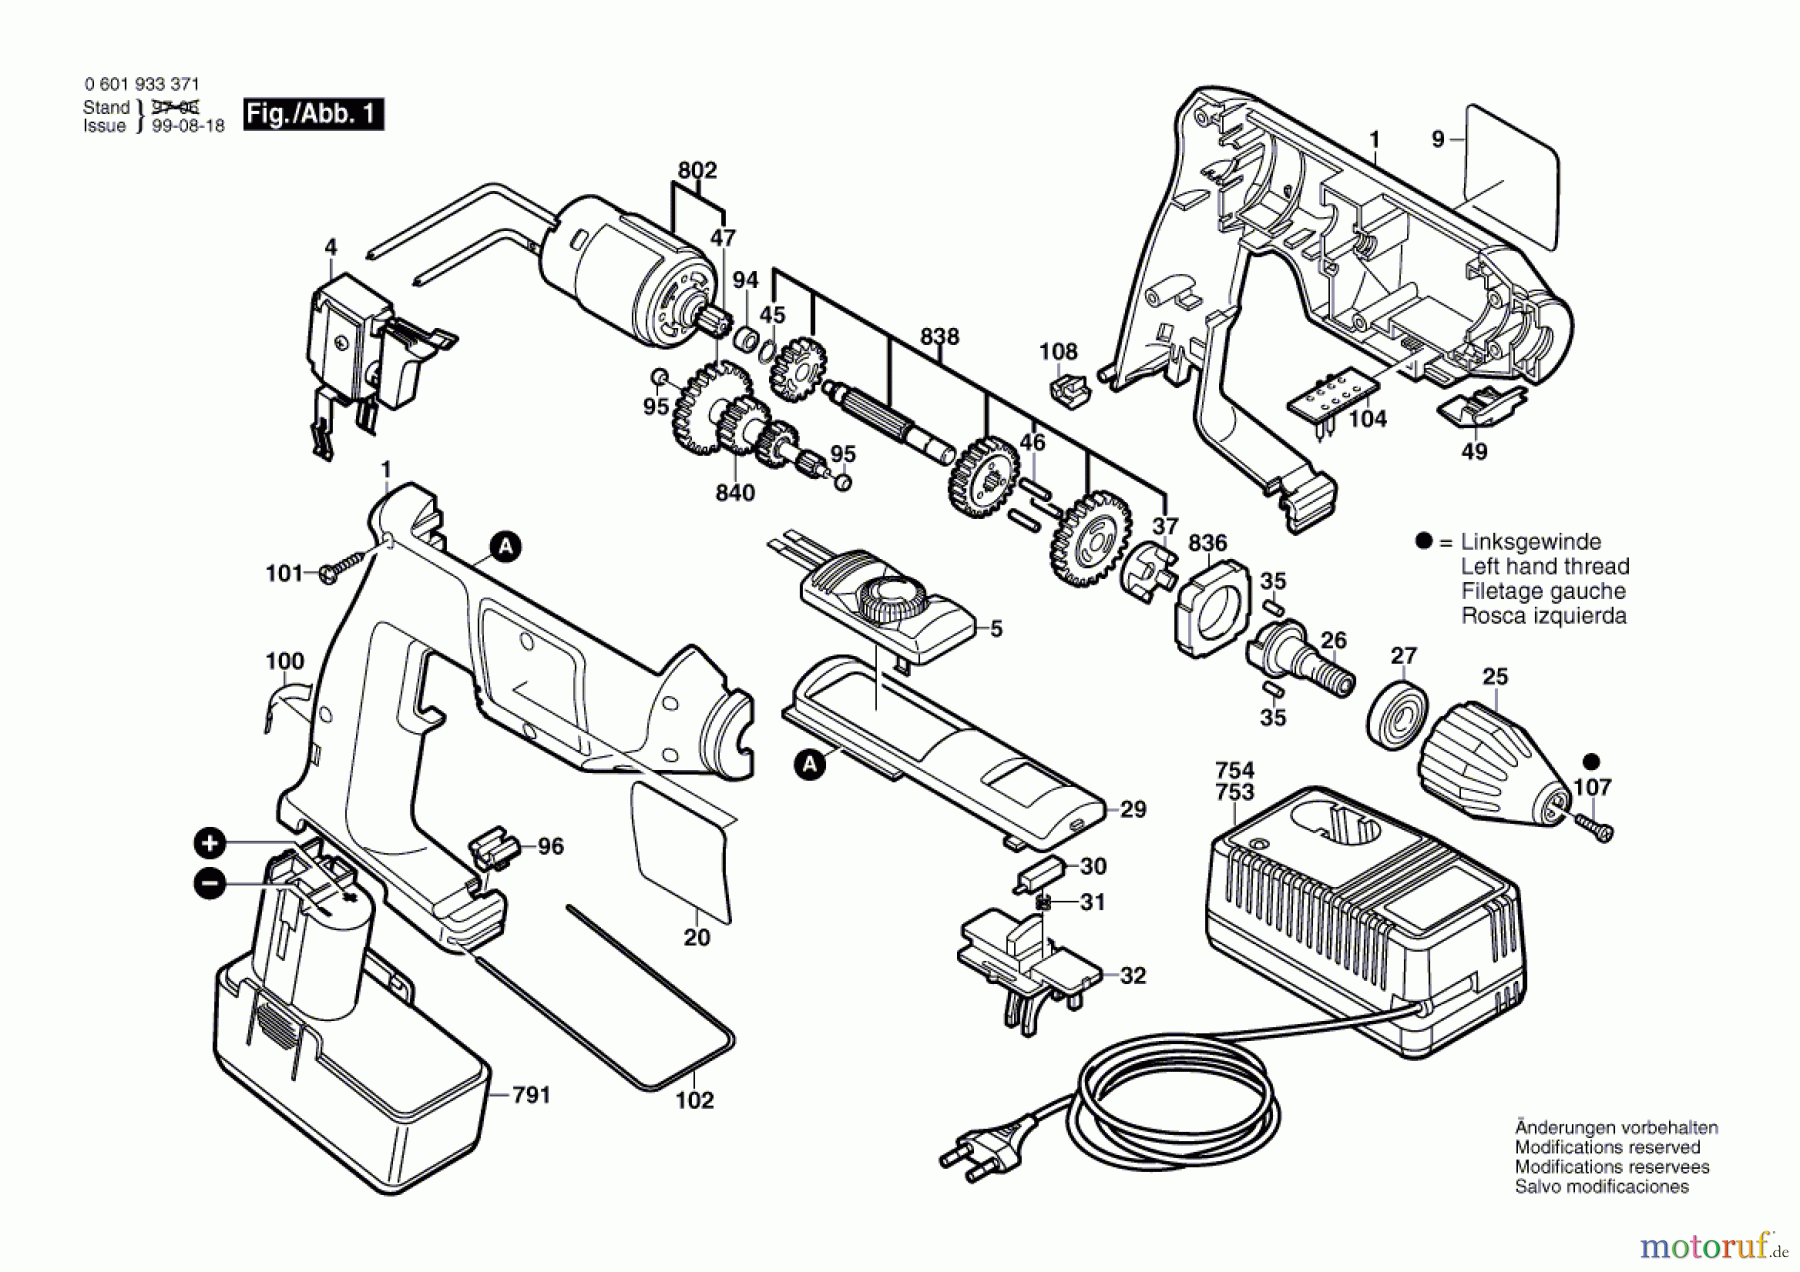  Bosch Akku Werkzeug Gw-Akku-Bohrmaschine ABM 96 P-3 Seite 1